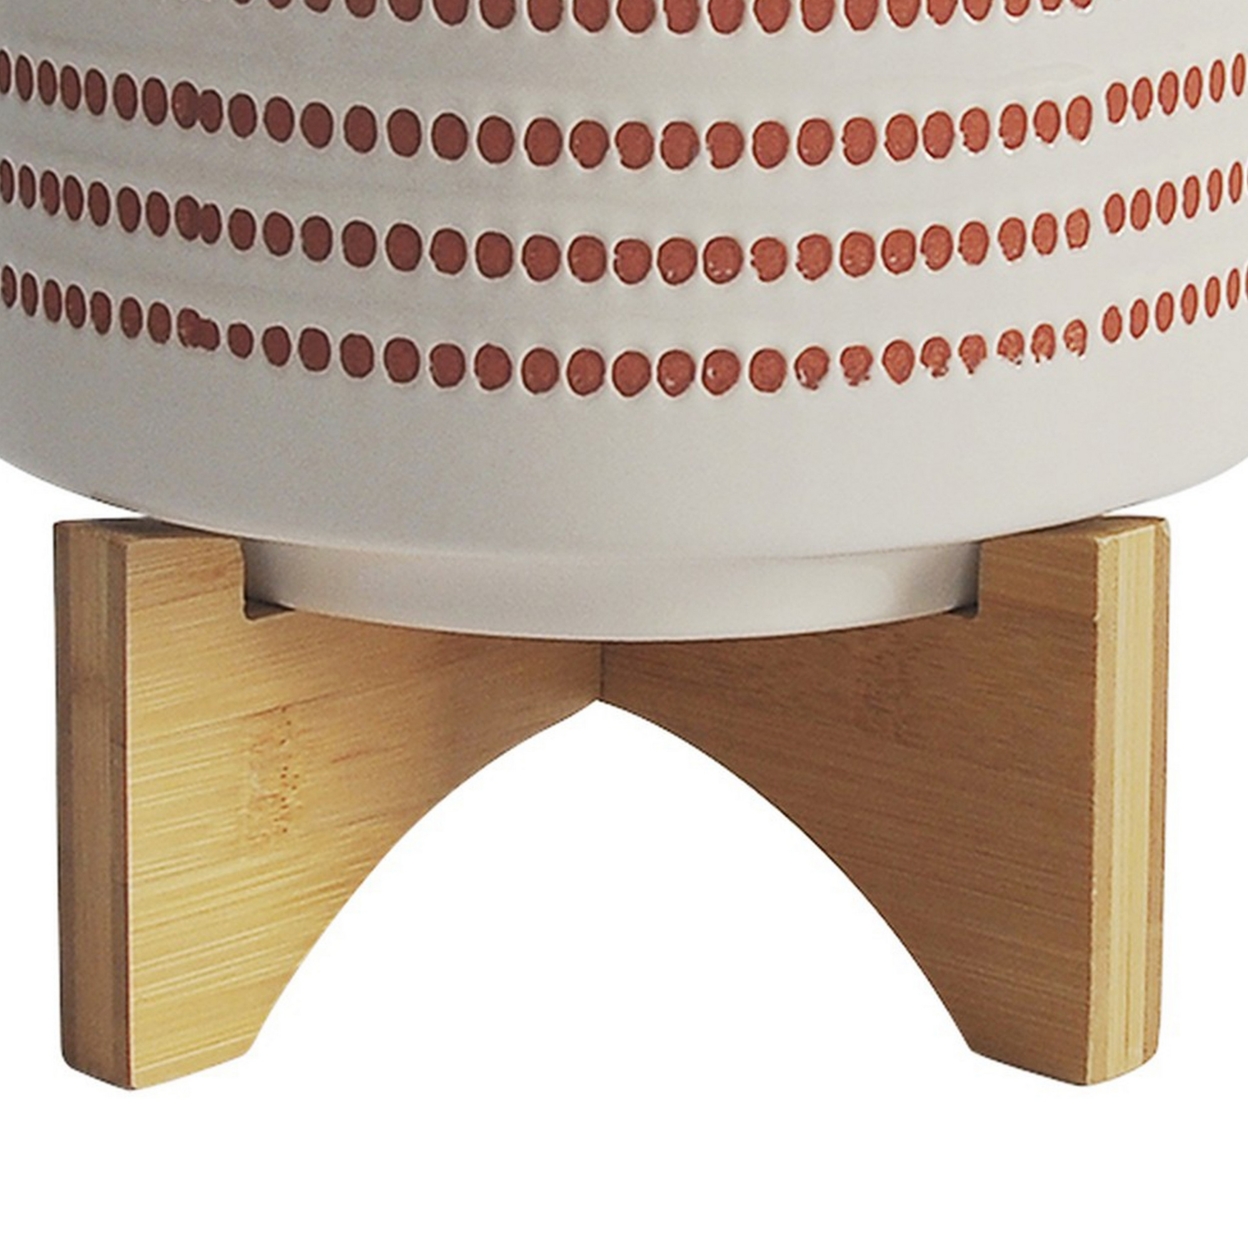 Ceramic Planter With Engraved Tribal Pattern And Wooden Stand, Large, Orange- Saltoro Sherpi